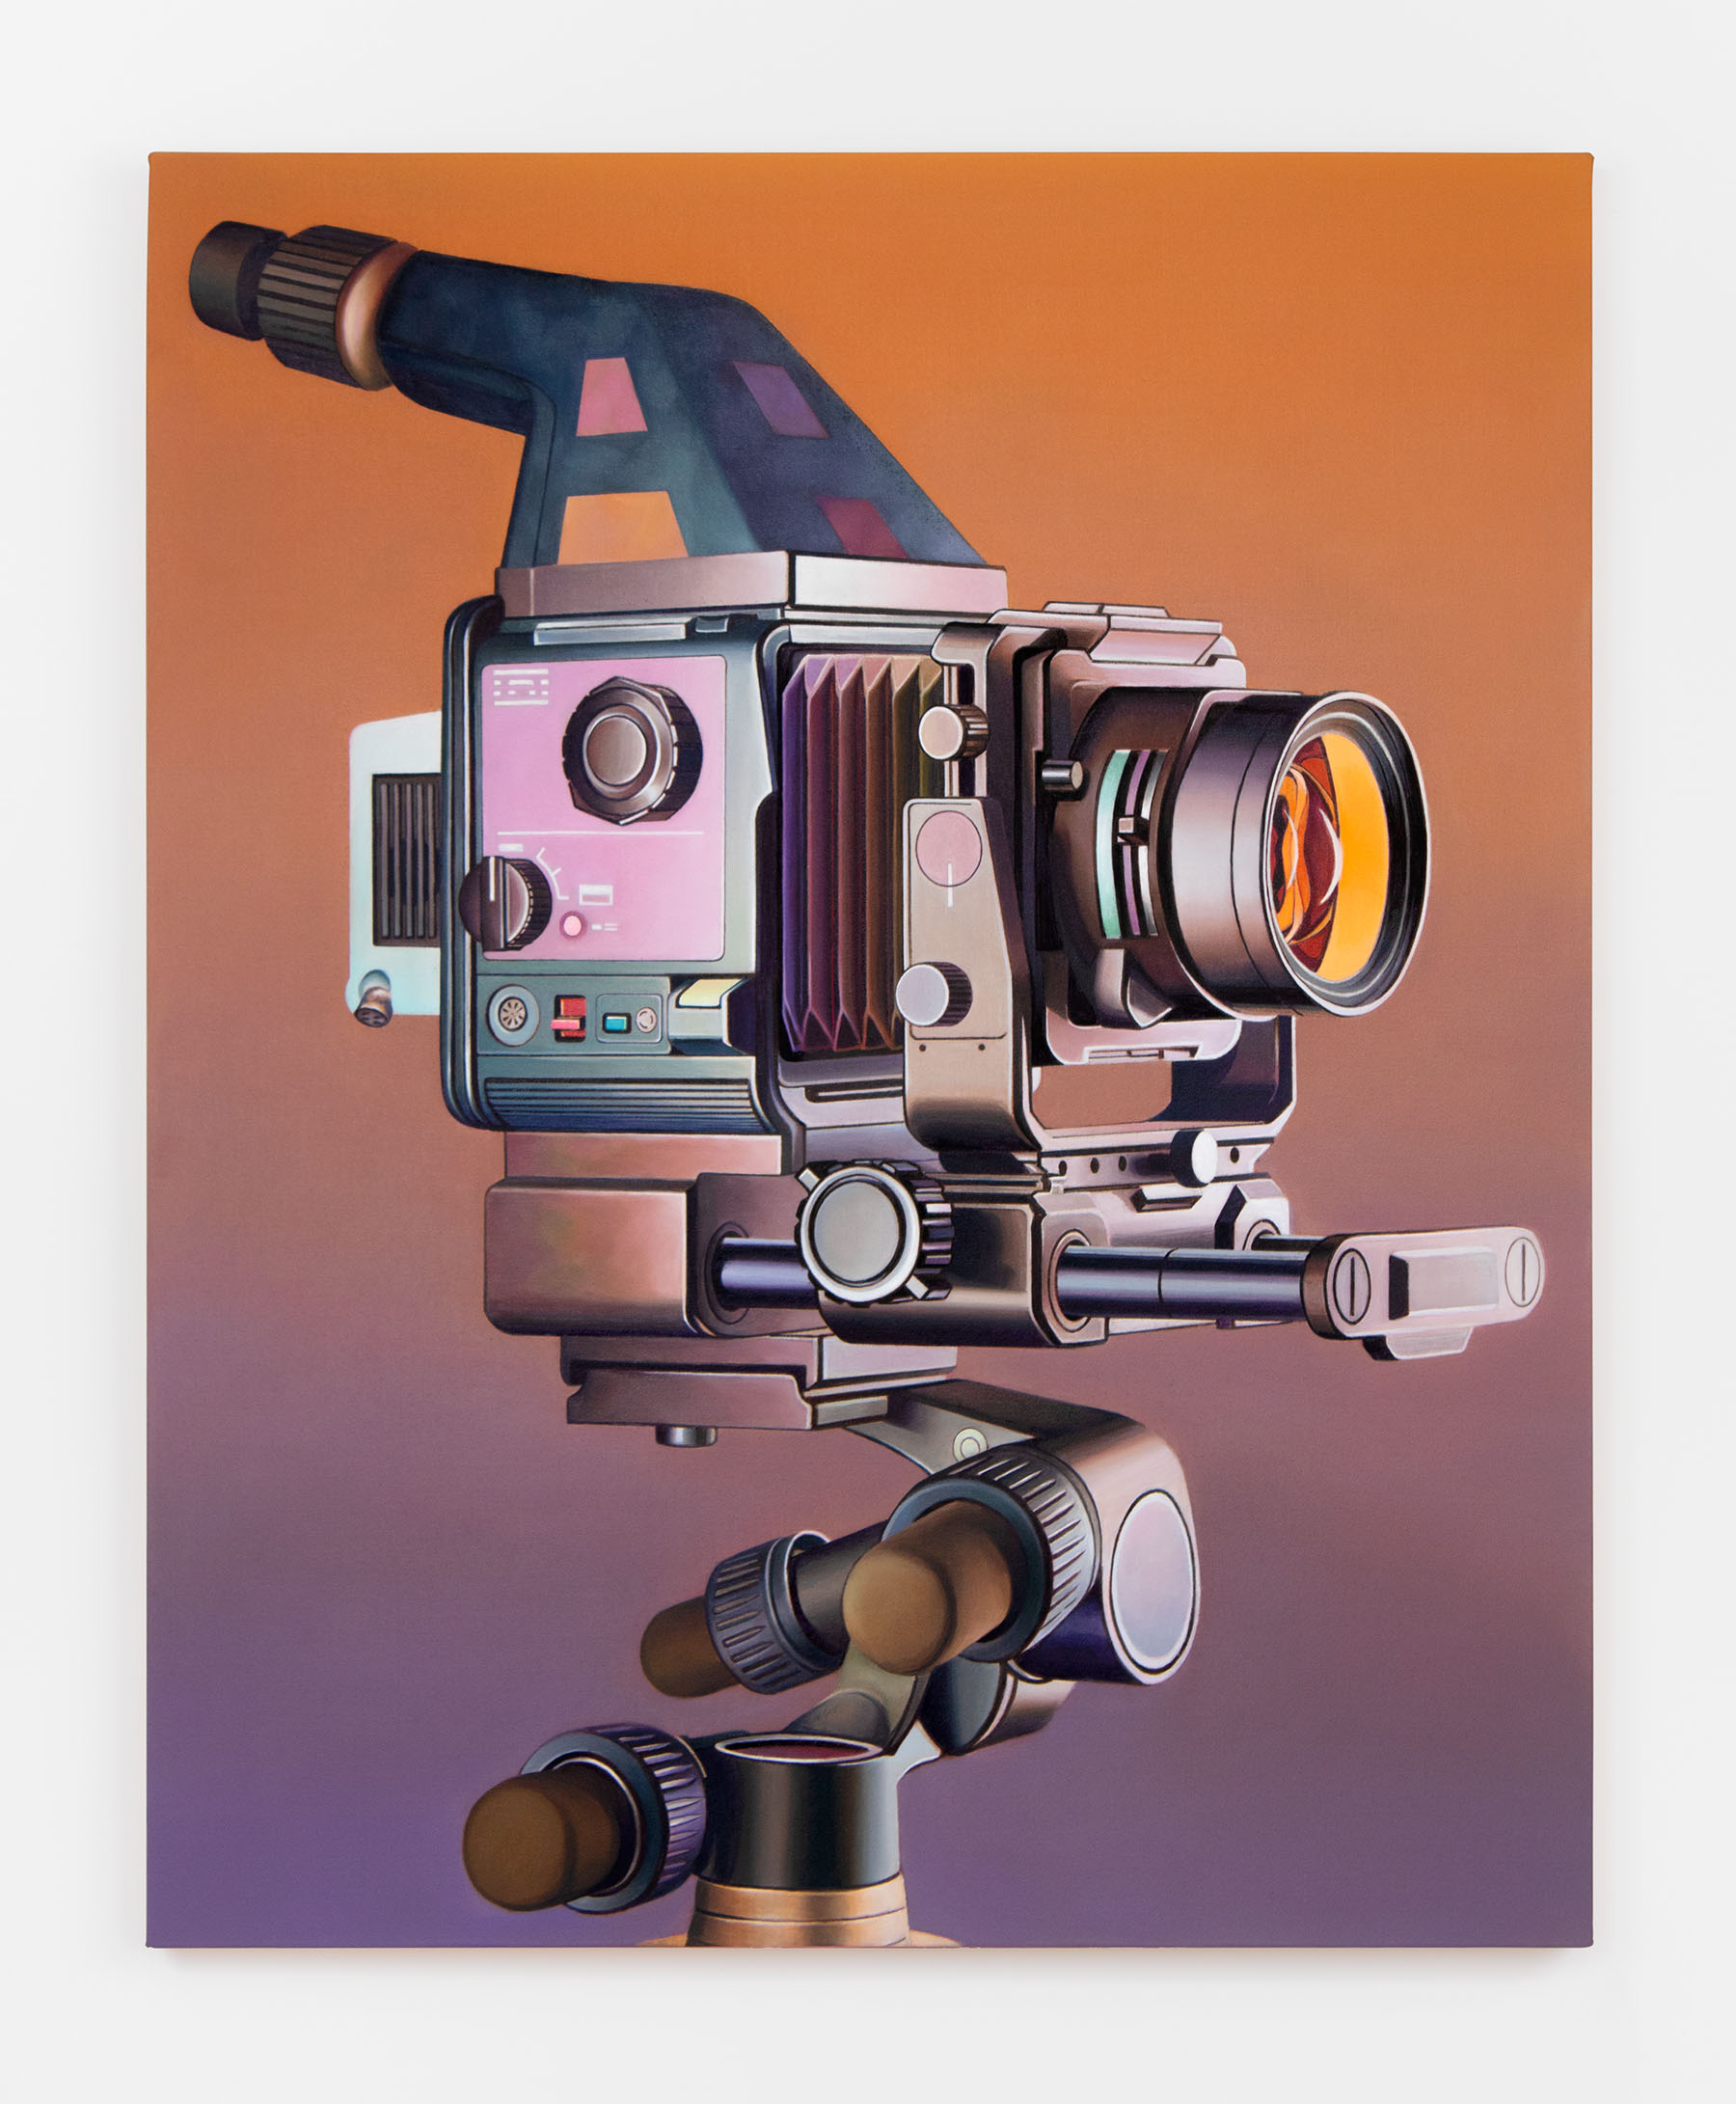 Chason Matthams, Untitled (Fuji GX680, orange/purple), 2022, Oil on linen over panel, 36h x 29w in.